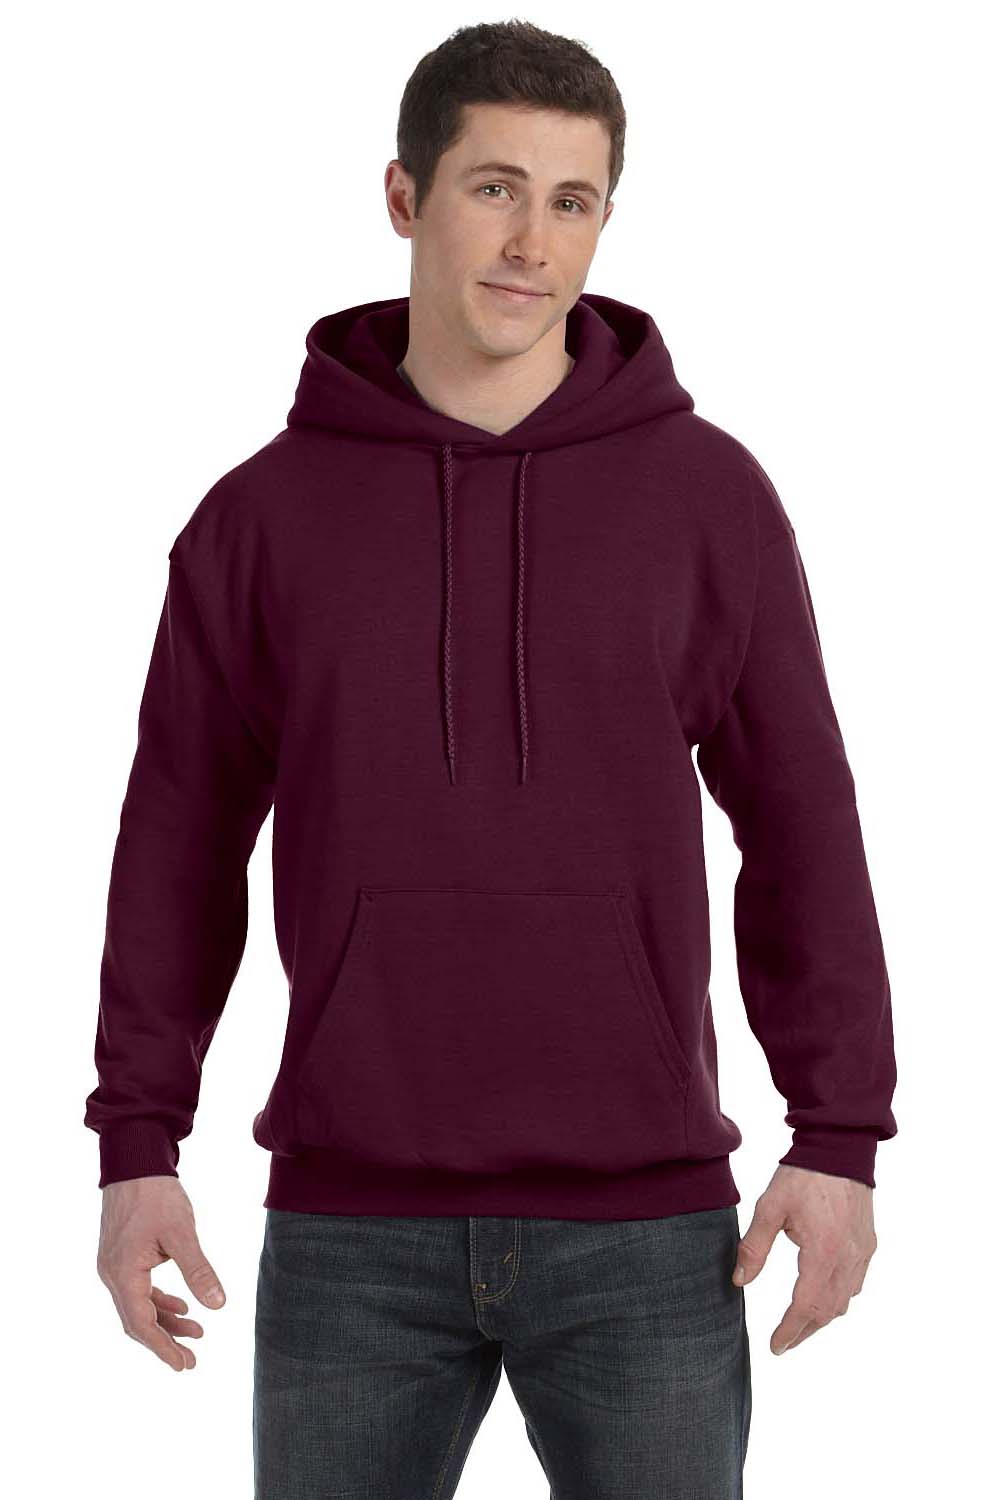 Hanes P170 Mens EcoSmart Print Pro XP Hooded Sweatshirt Hoodie Maroon Front